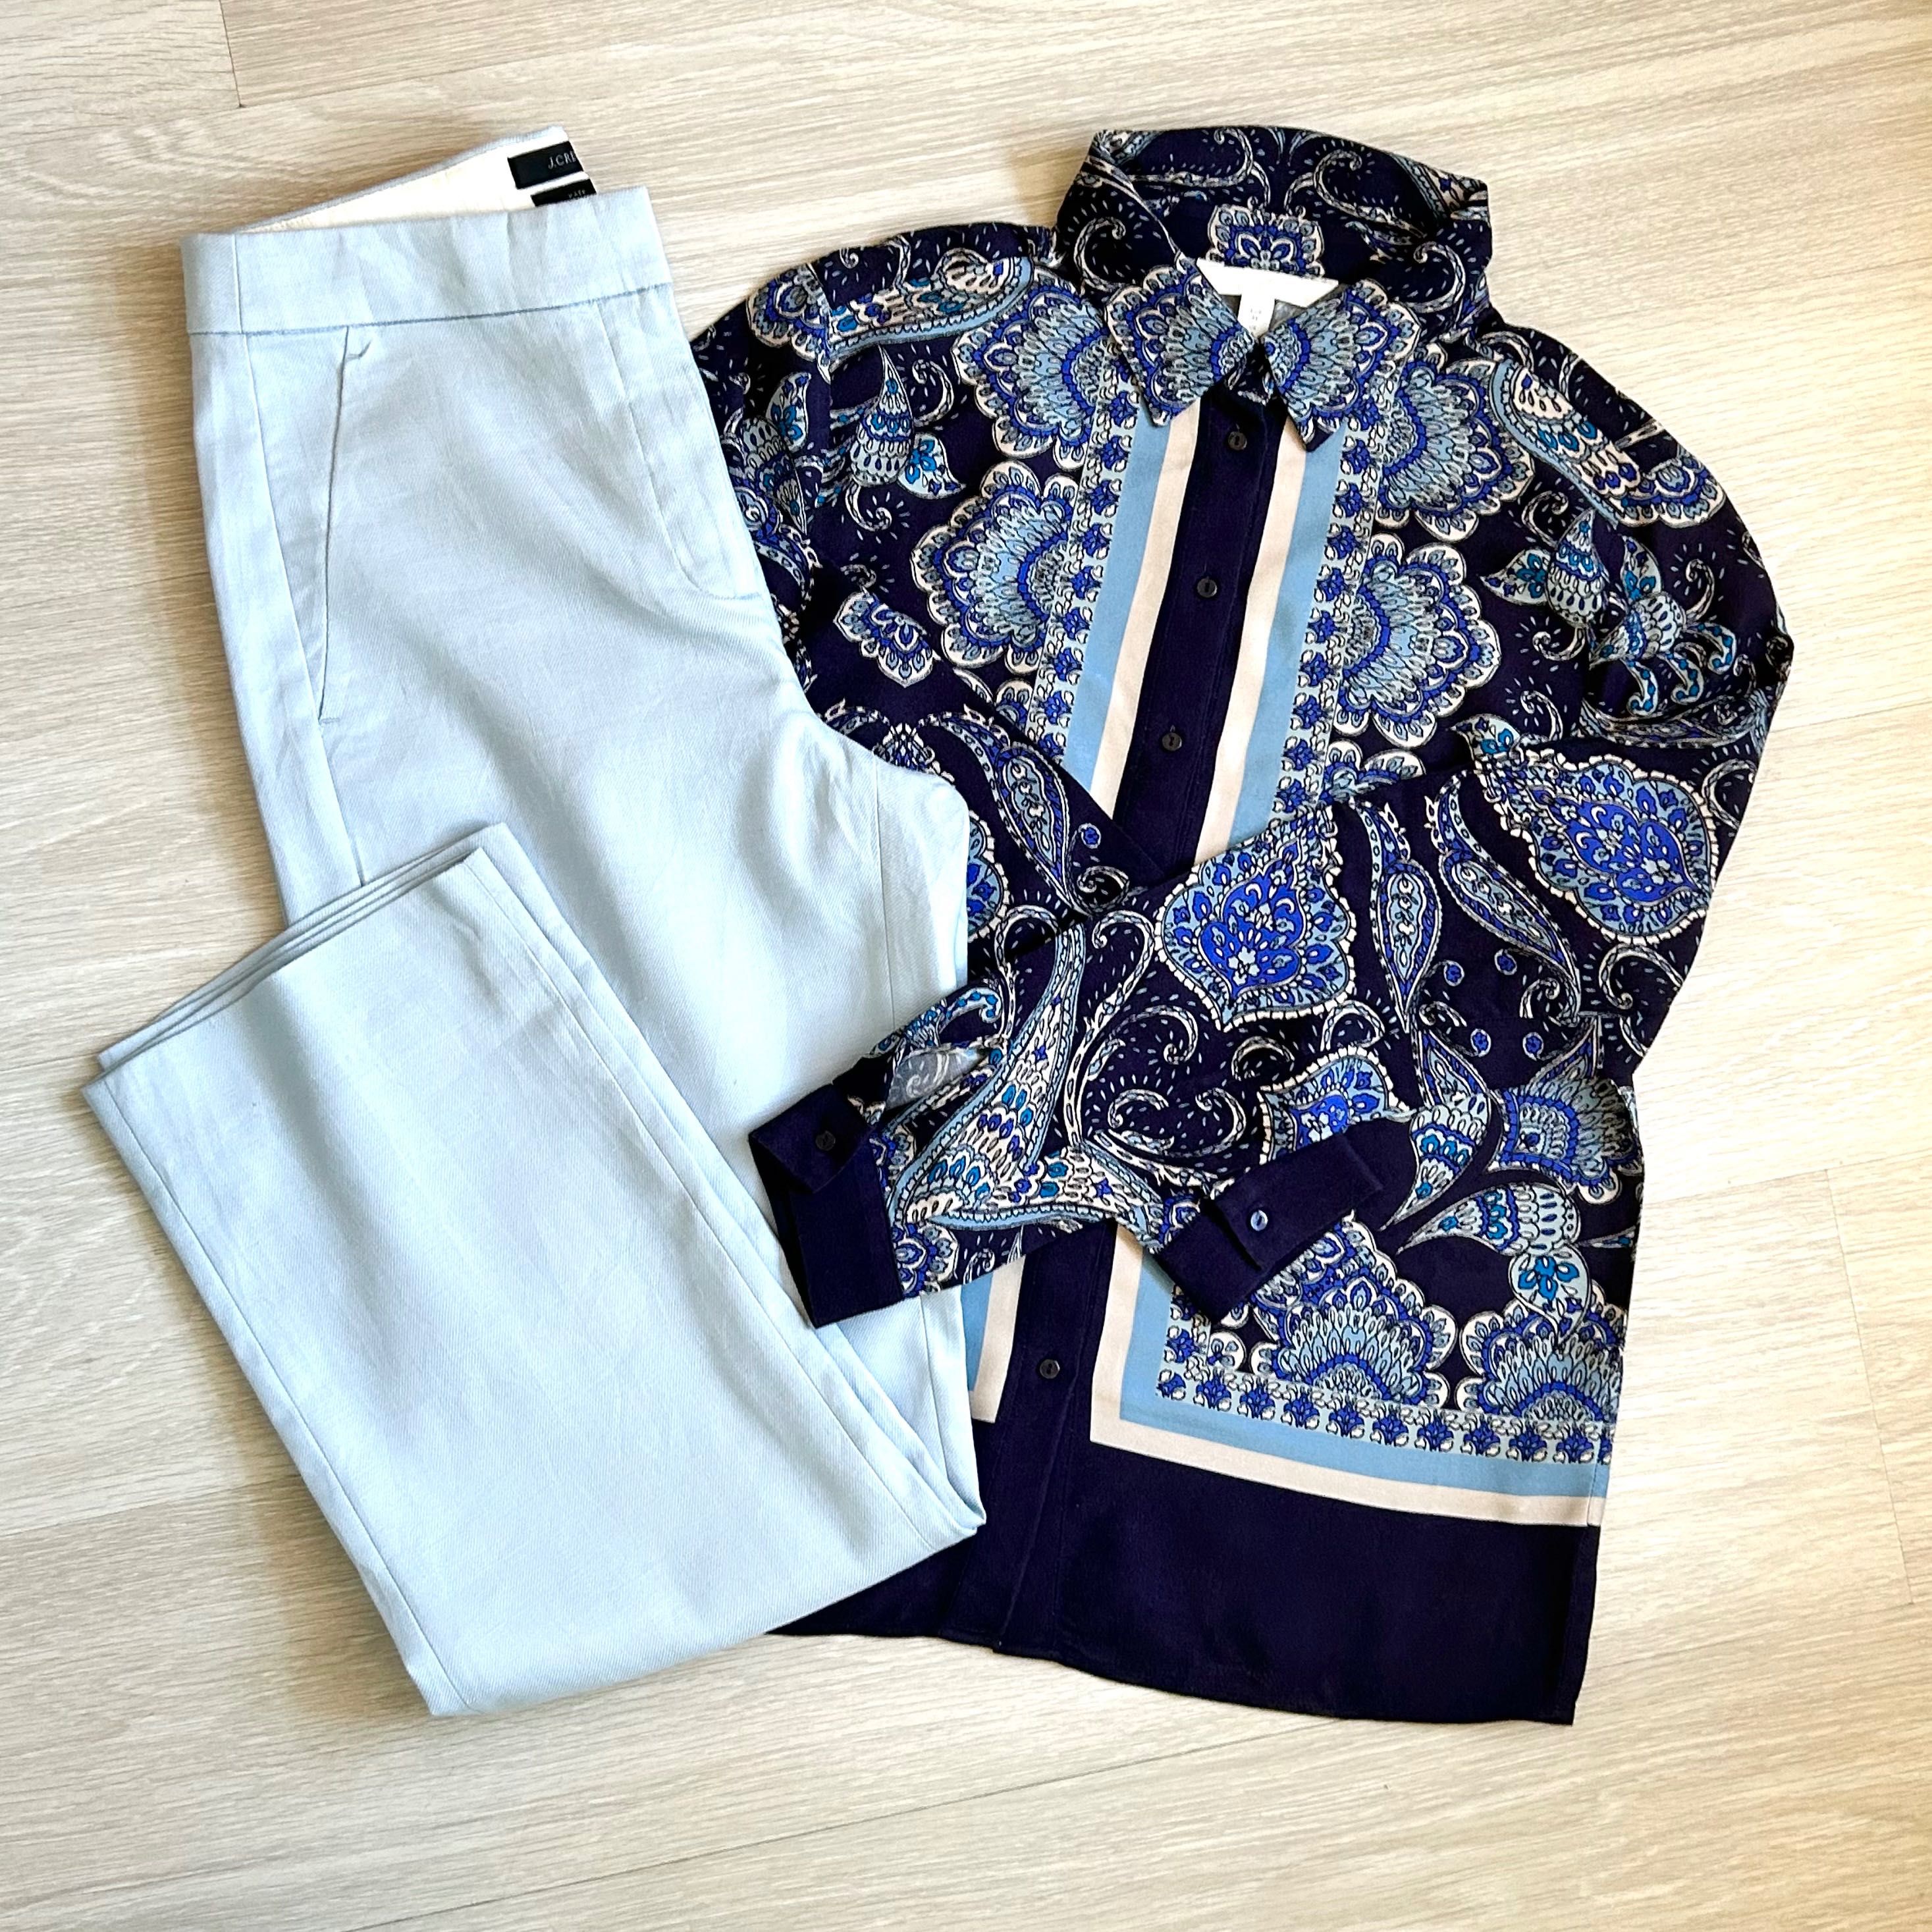 J.Crew елегантен панталон и авангардна риза/туника H&M